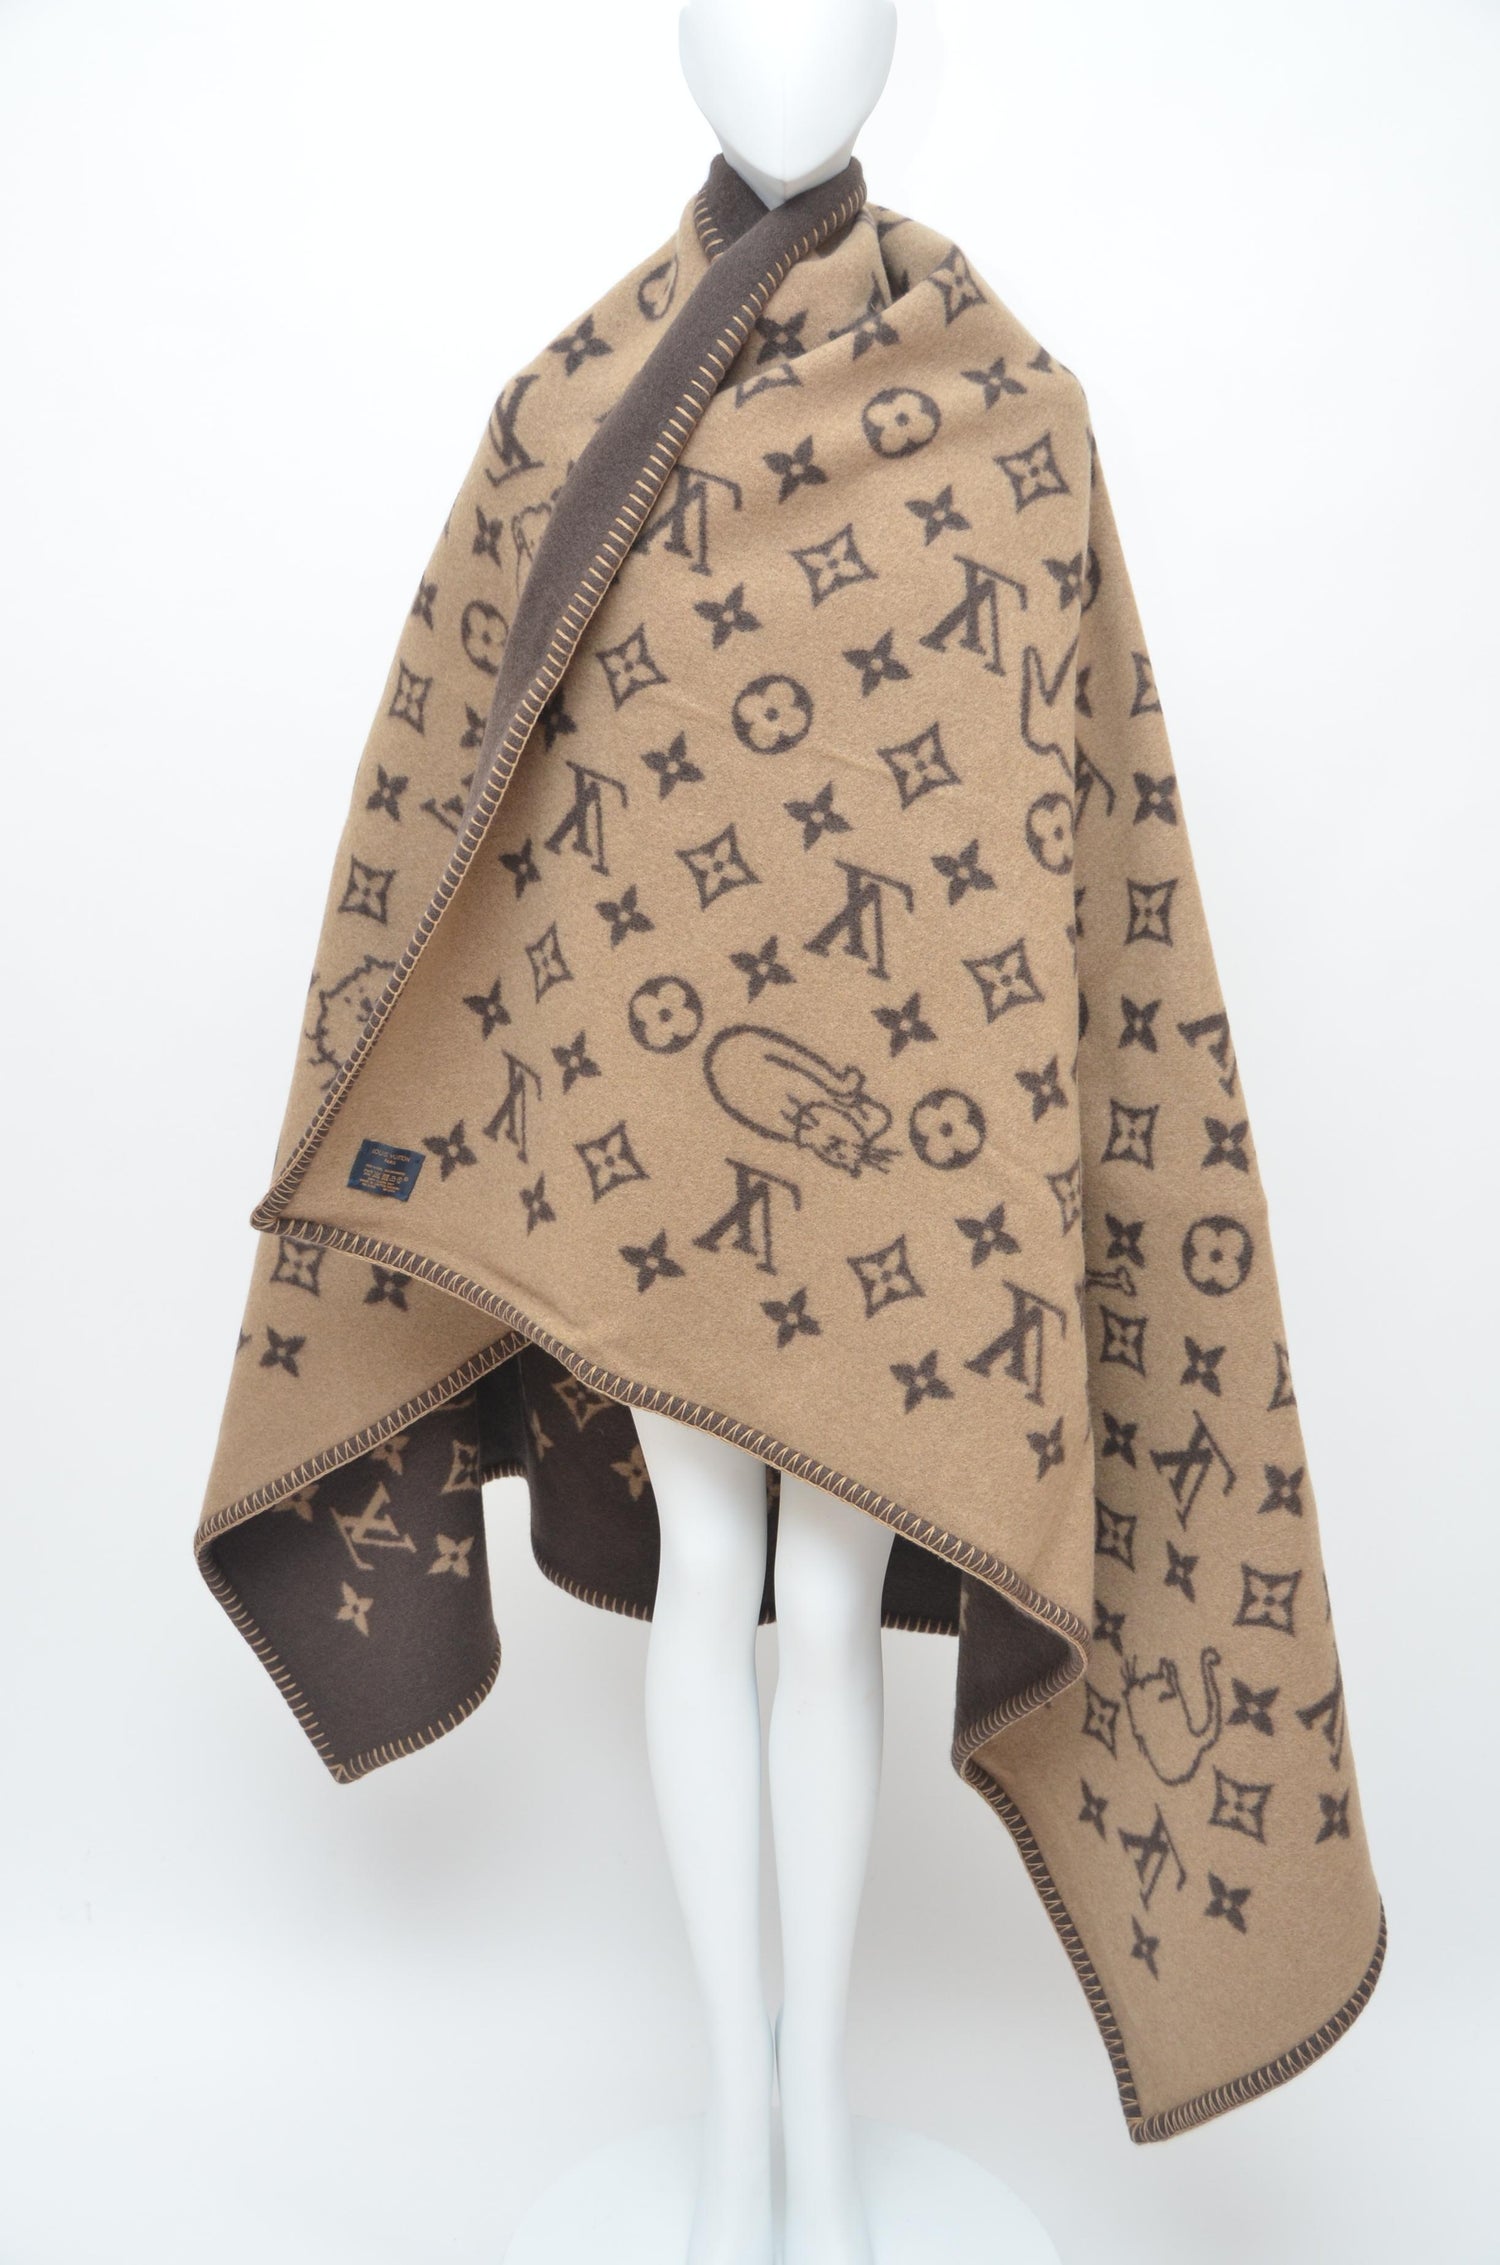 Big blanket/scarf with Monogram print, Louis Vuitton; black hat, Pendleton.  (picture courtesy soulgraphy.com)